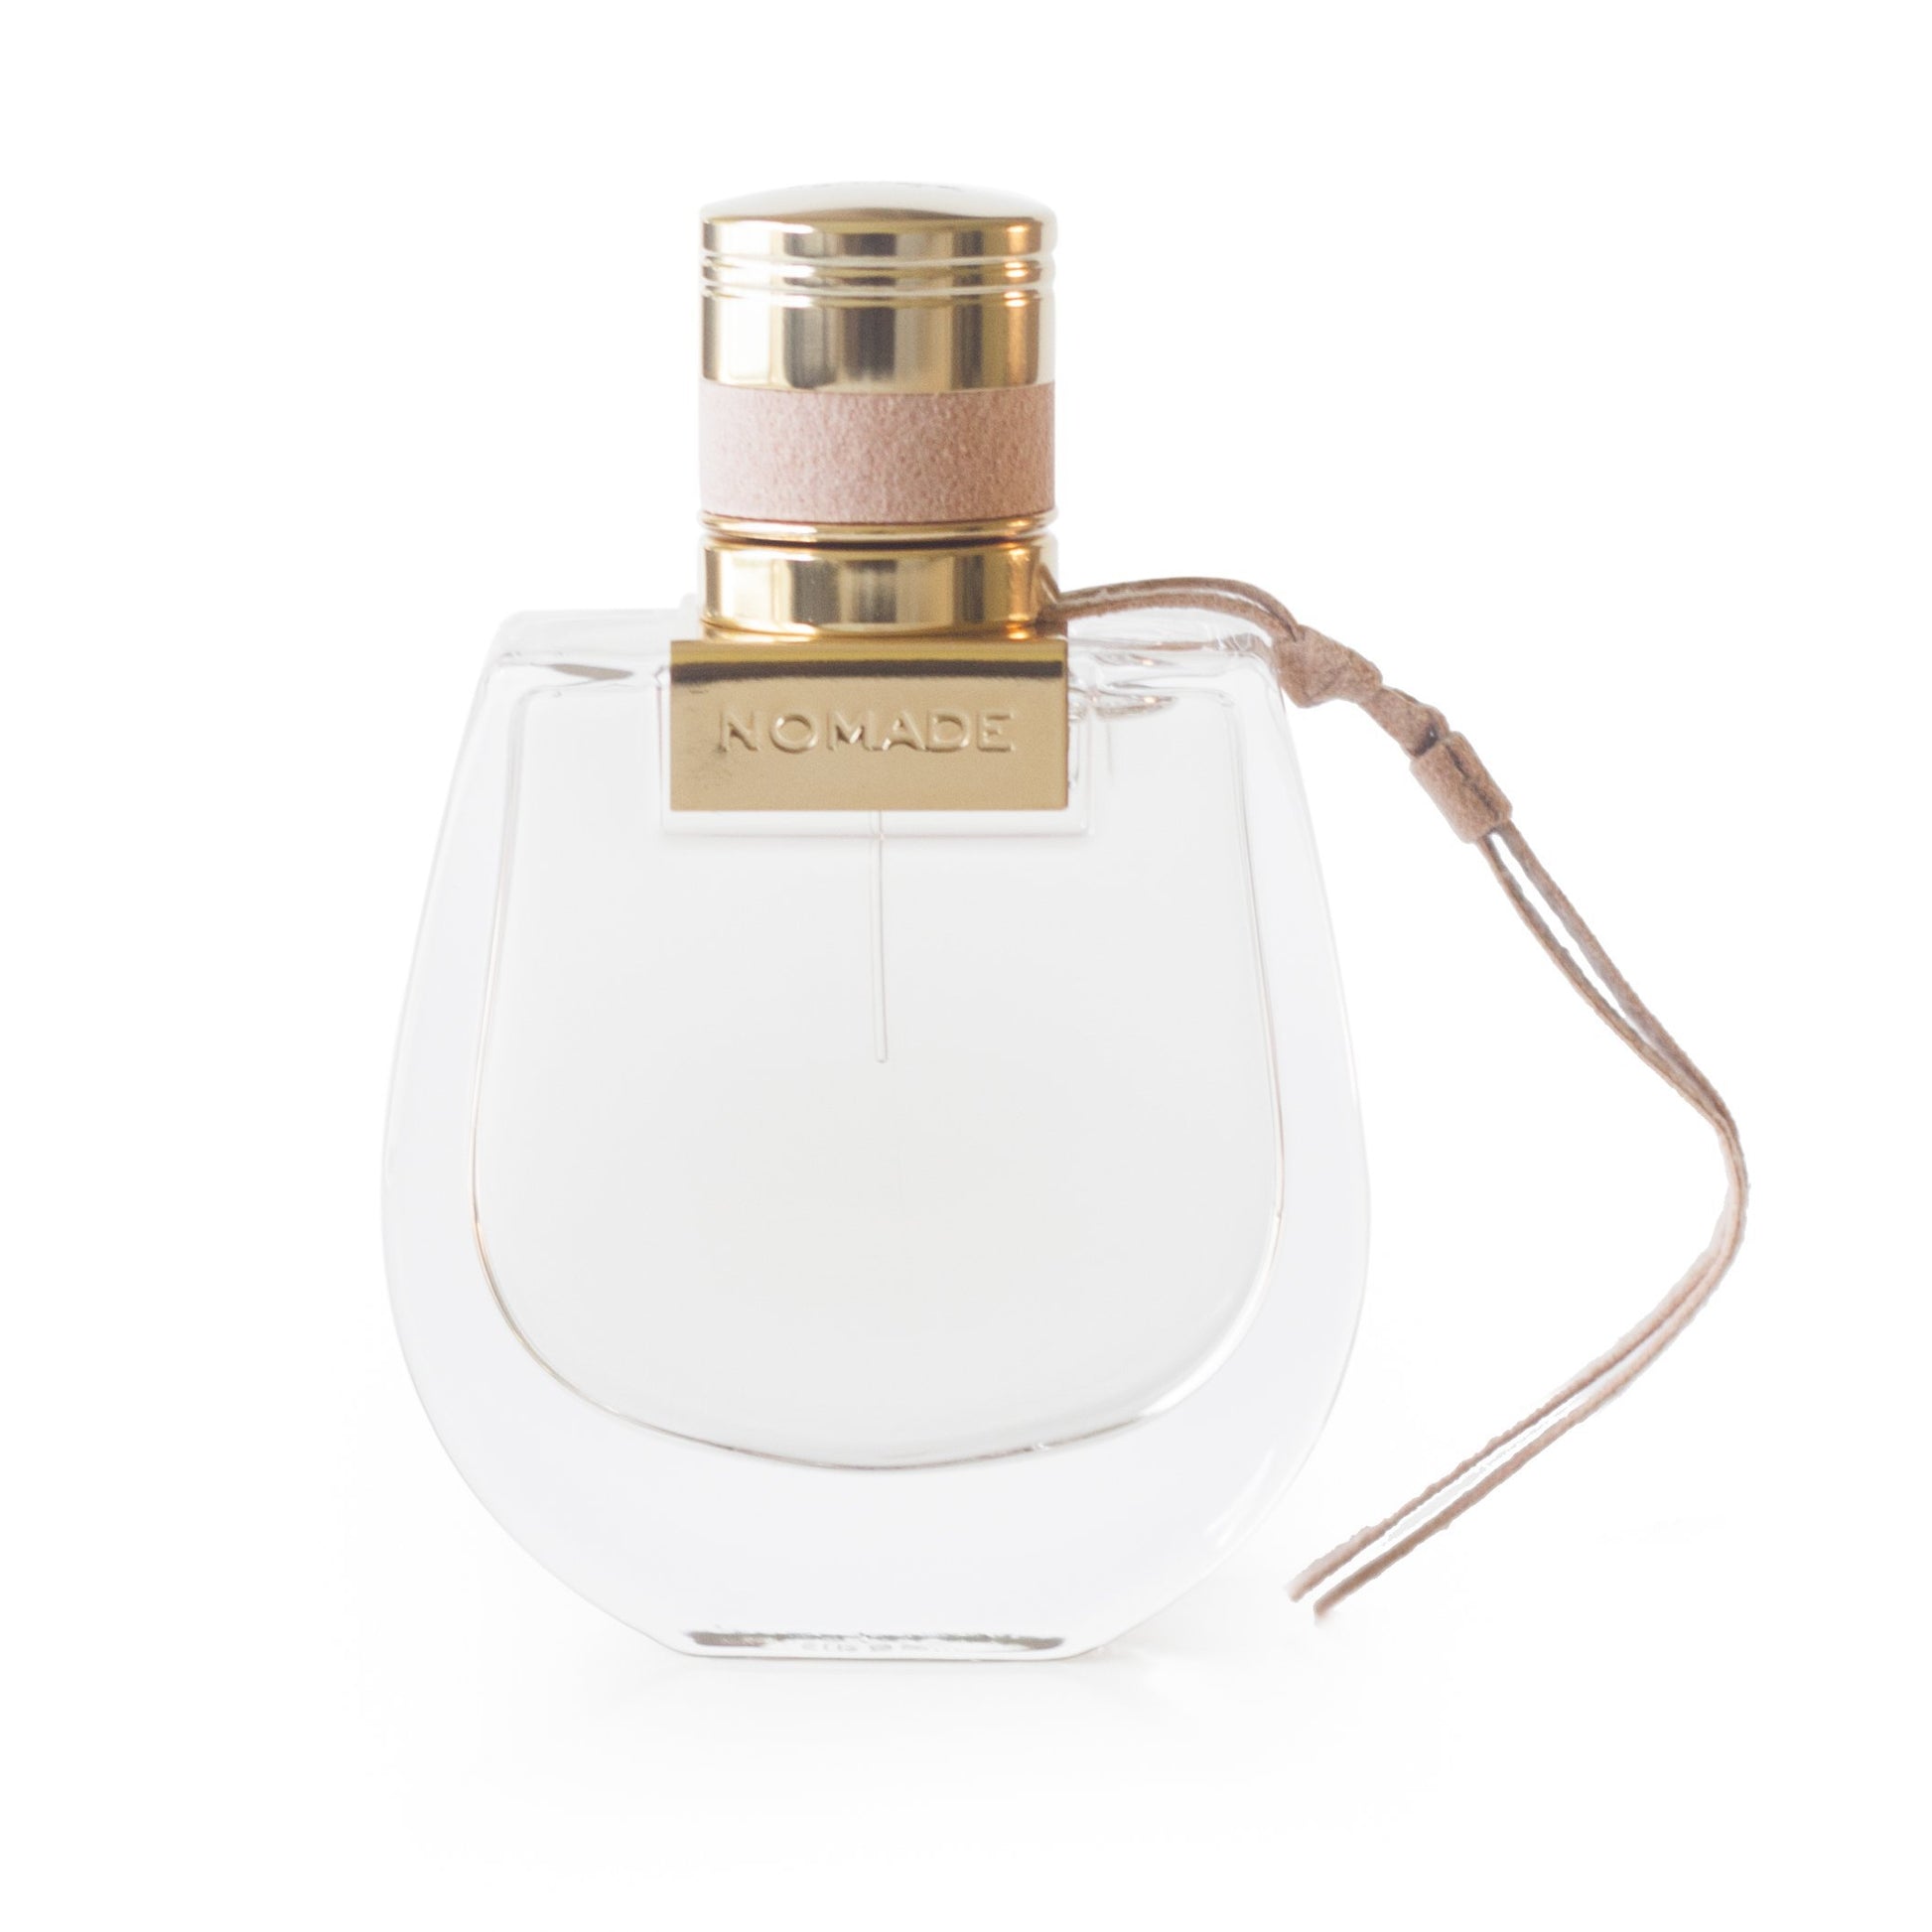 Nomade Eau de – Spray Women Fragrance by Parfum Chloe for Outlet